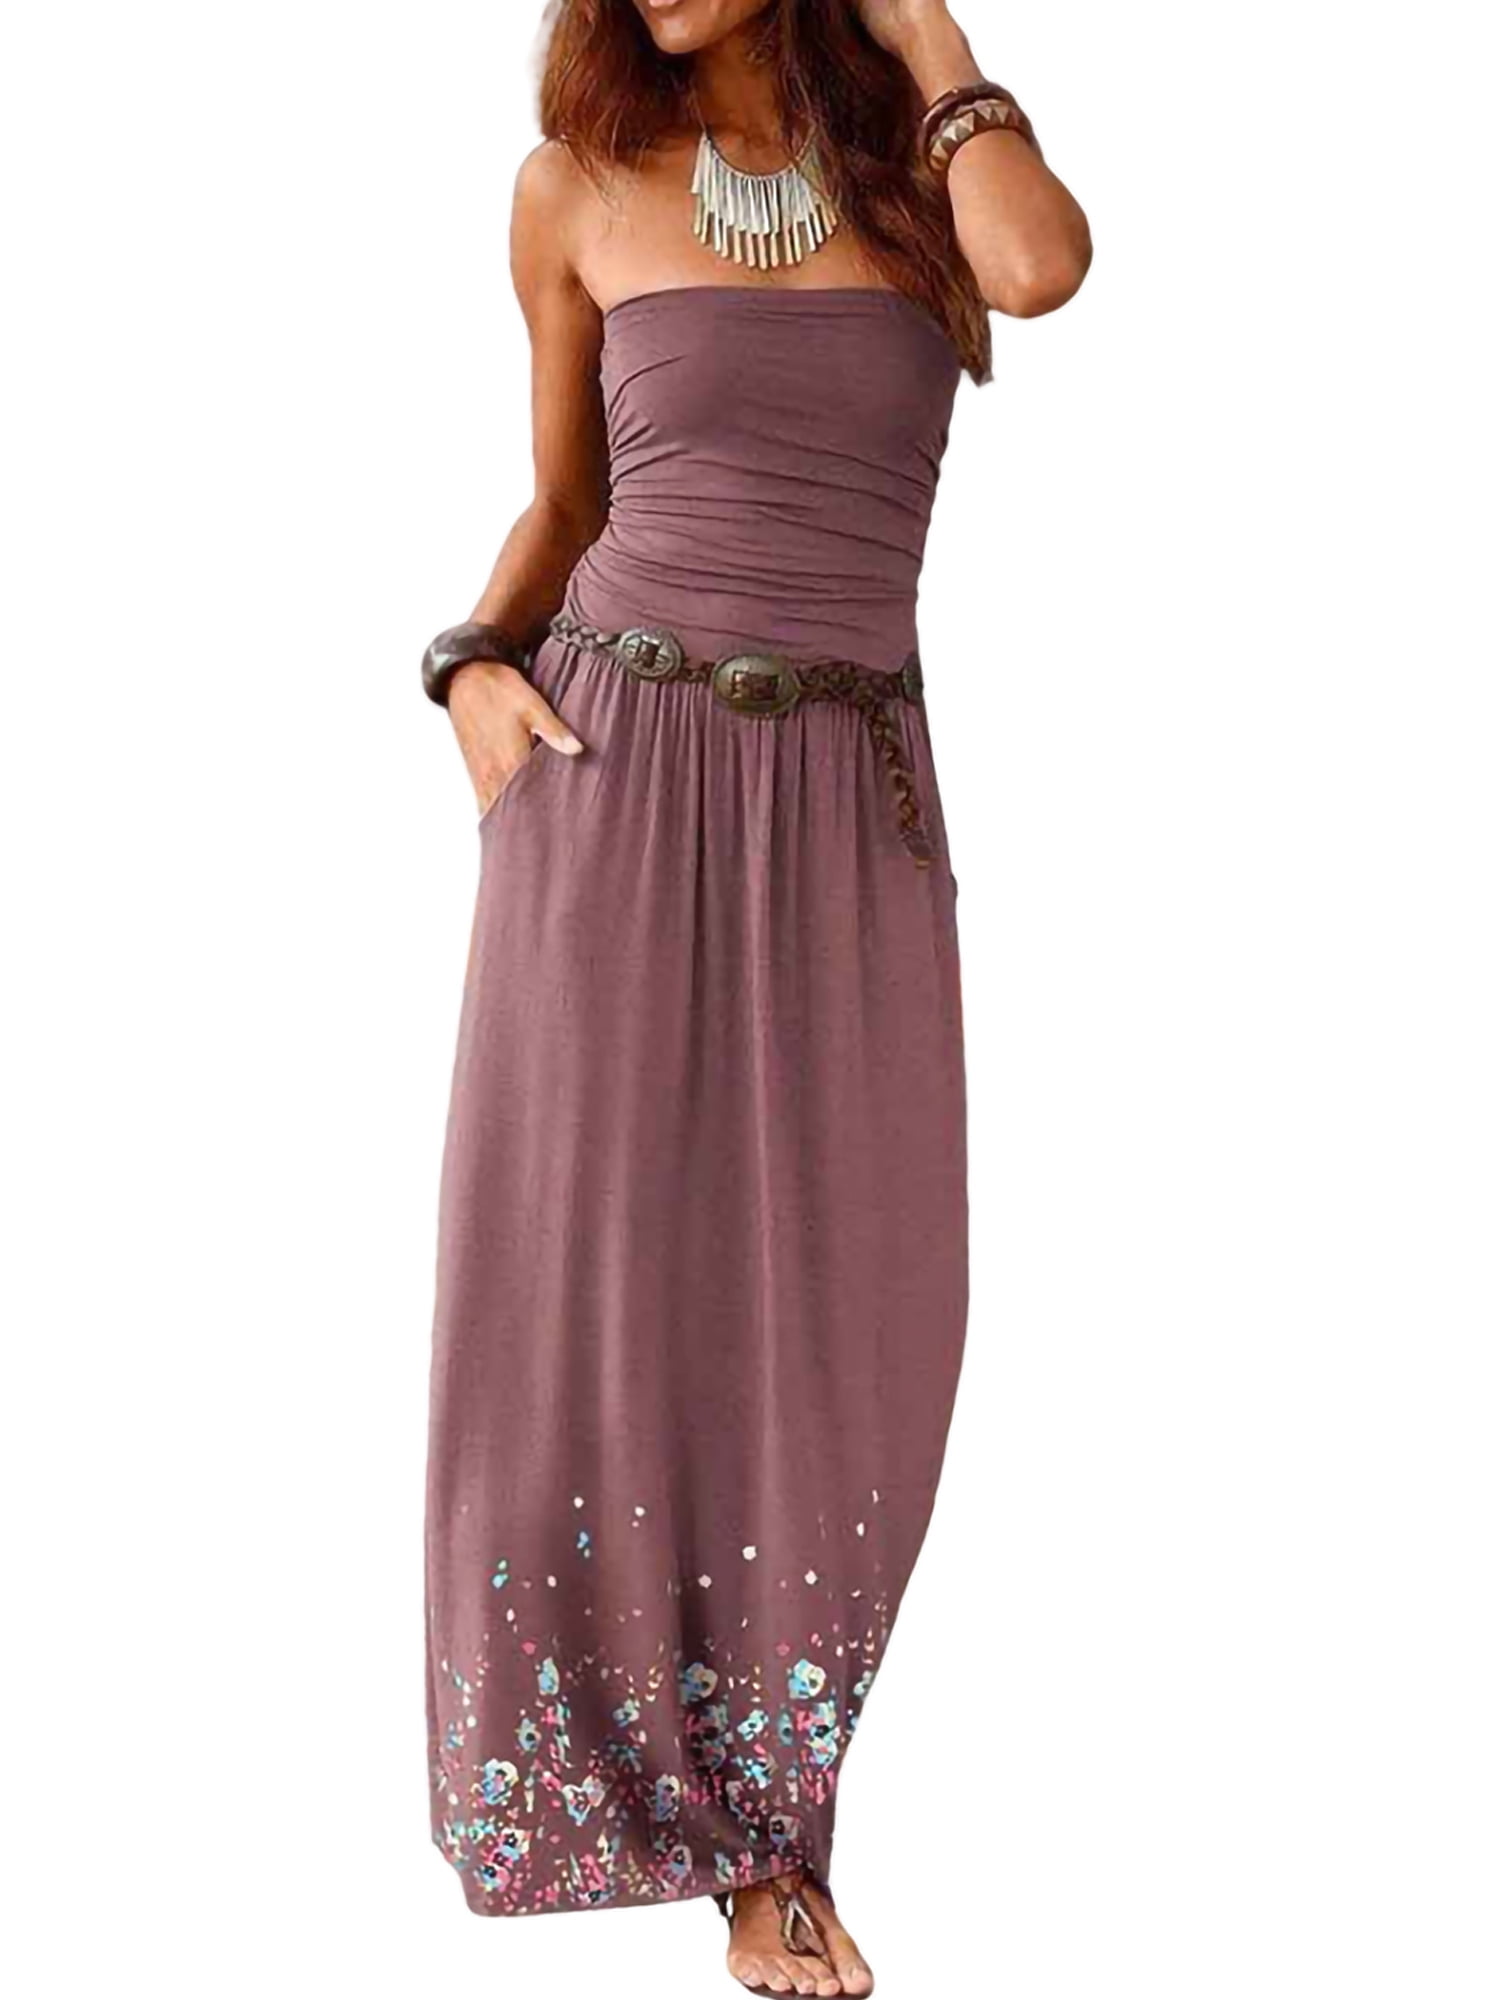 Sexy Strapless Purple Dresses